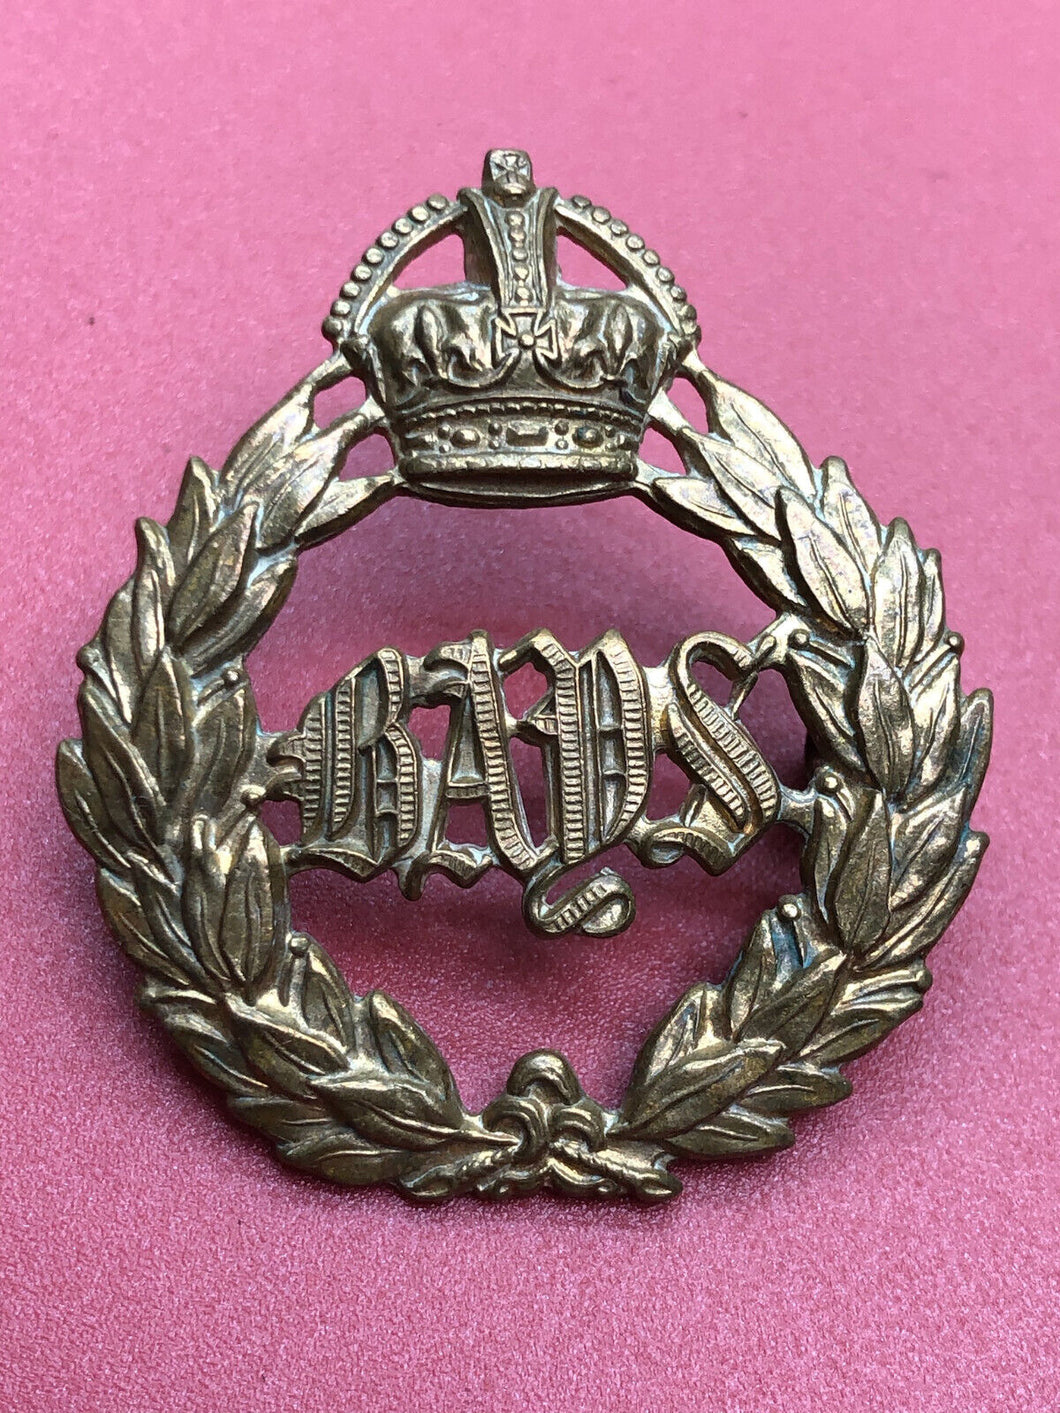 Original WW2 British Army Cap Badge - 2nd Dragoon Guards Regiment